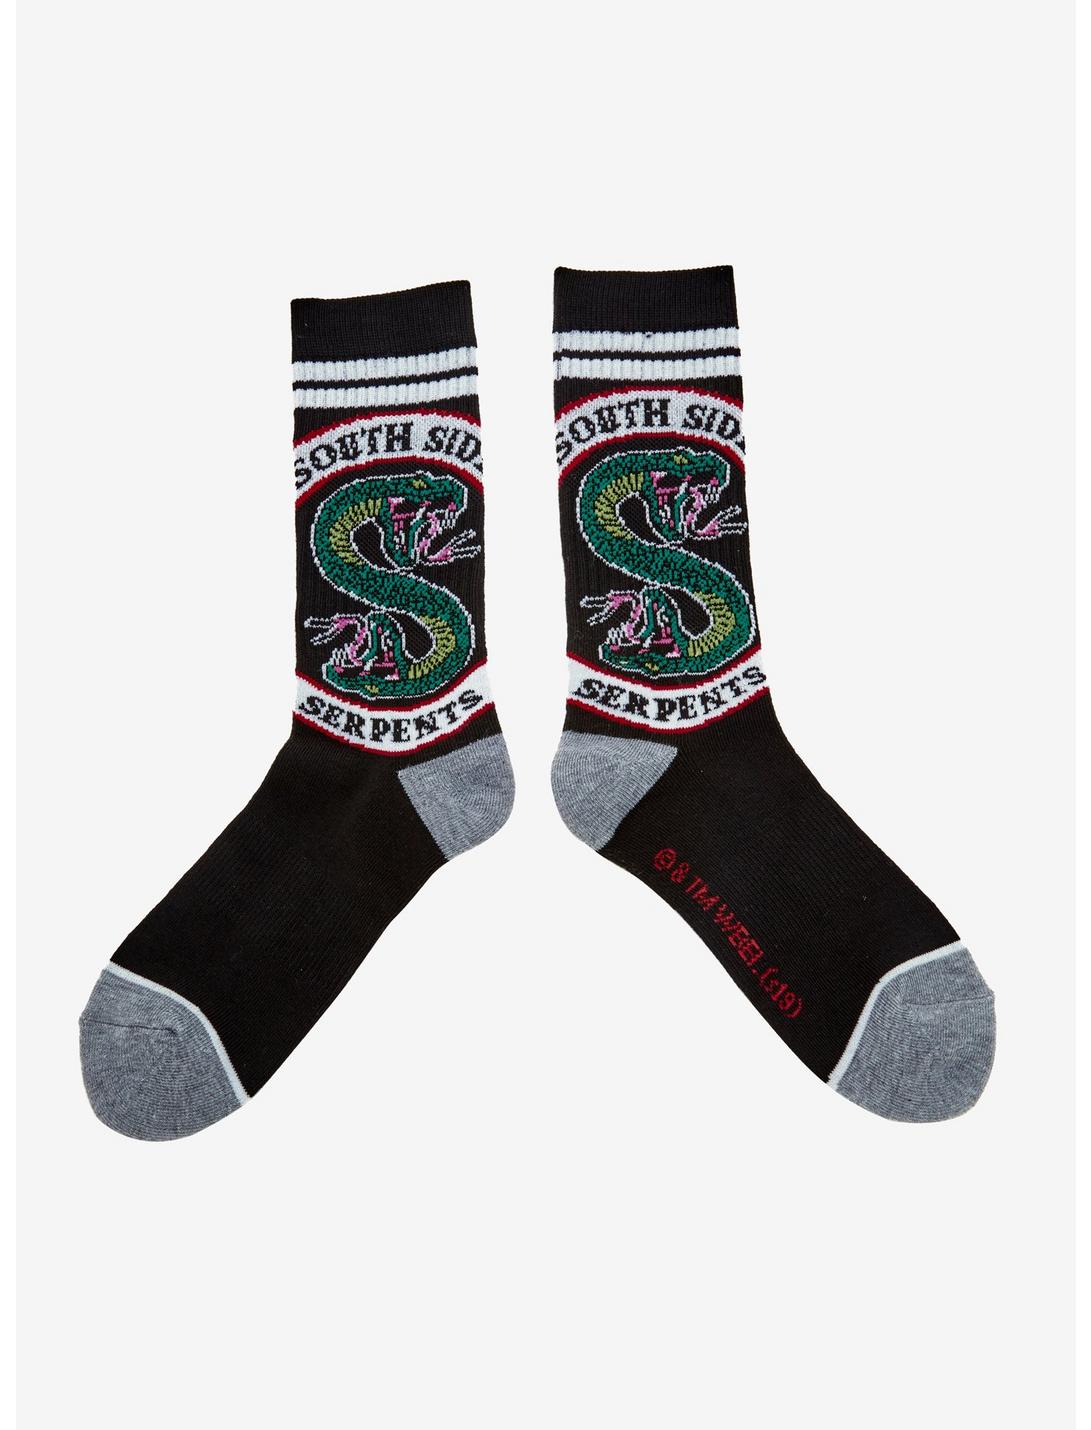 Riverdale Southside Serpents Varsity Crew Socks  Hot Topic Exclusive, , hi-res